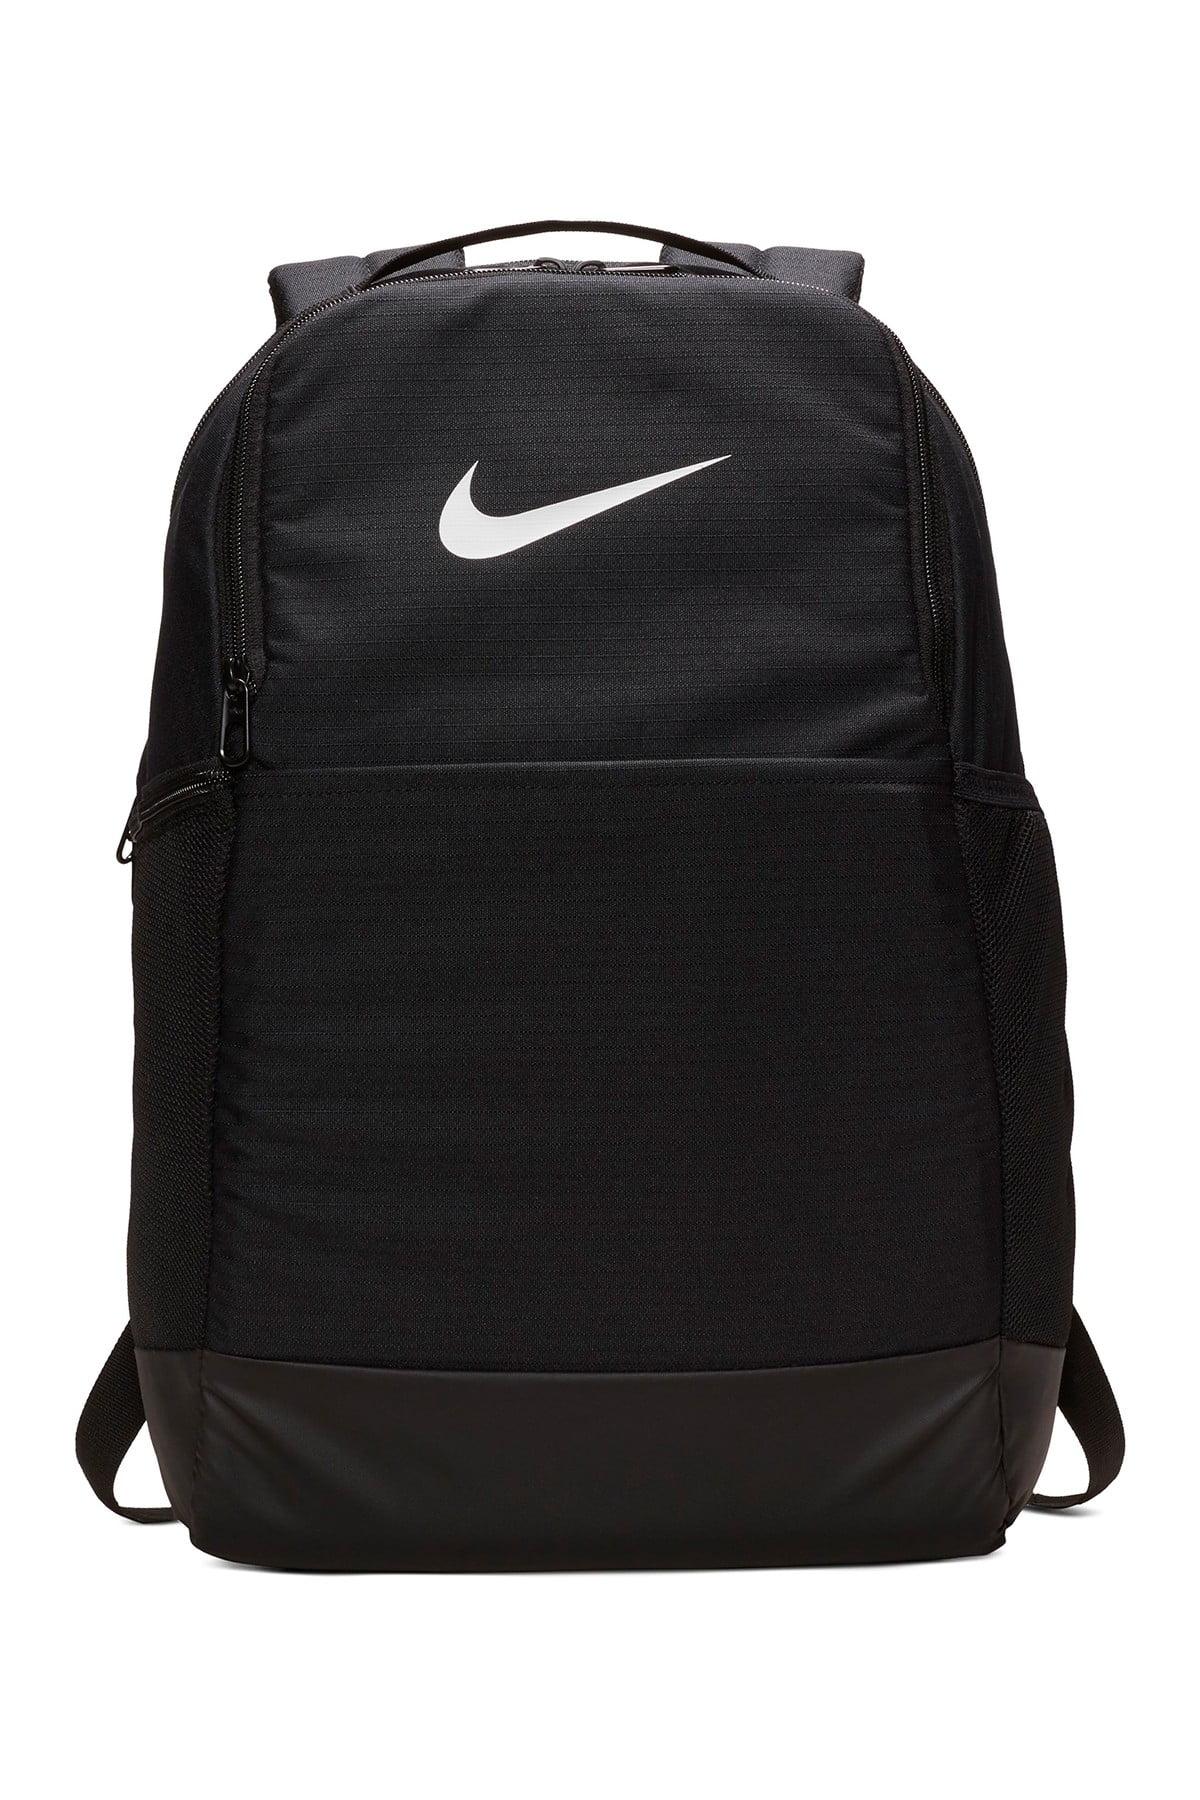 Nike Brasilia Training Backpack in Black/White (Black) - Save 61% - Lyst